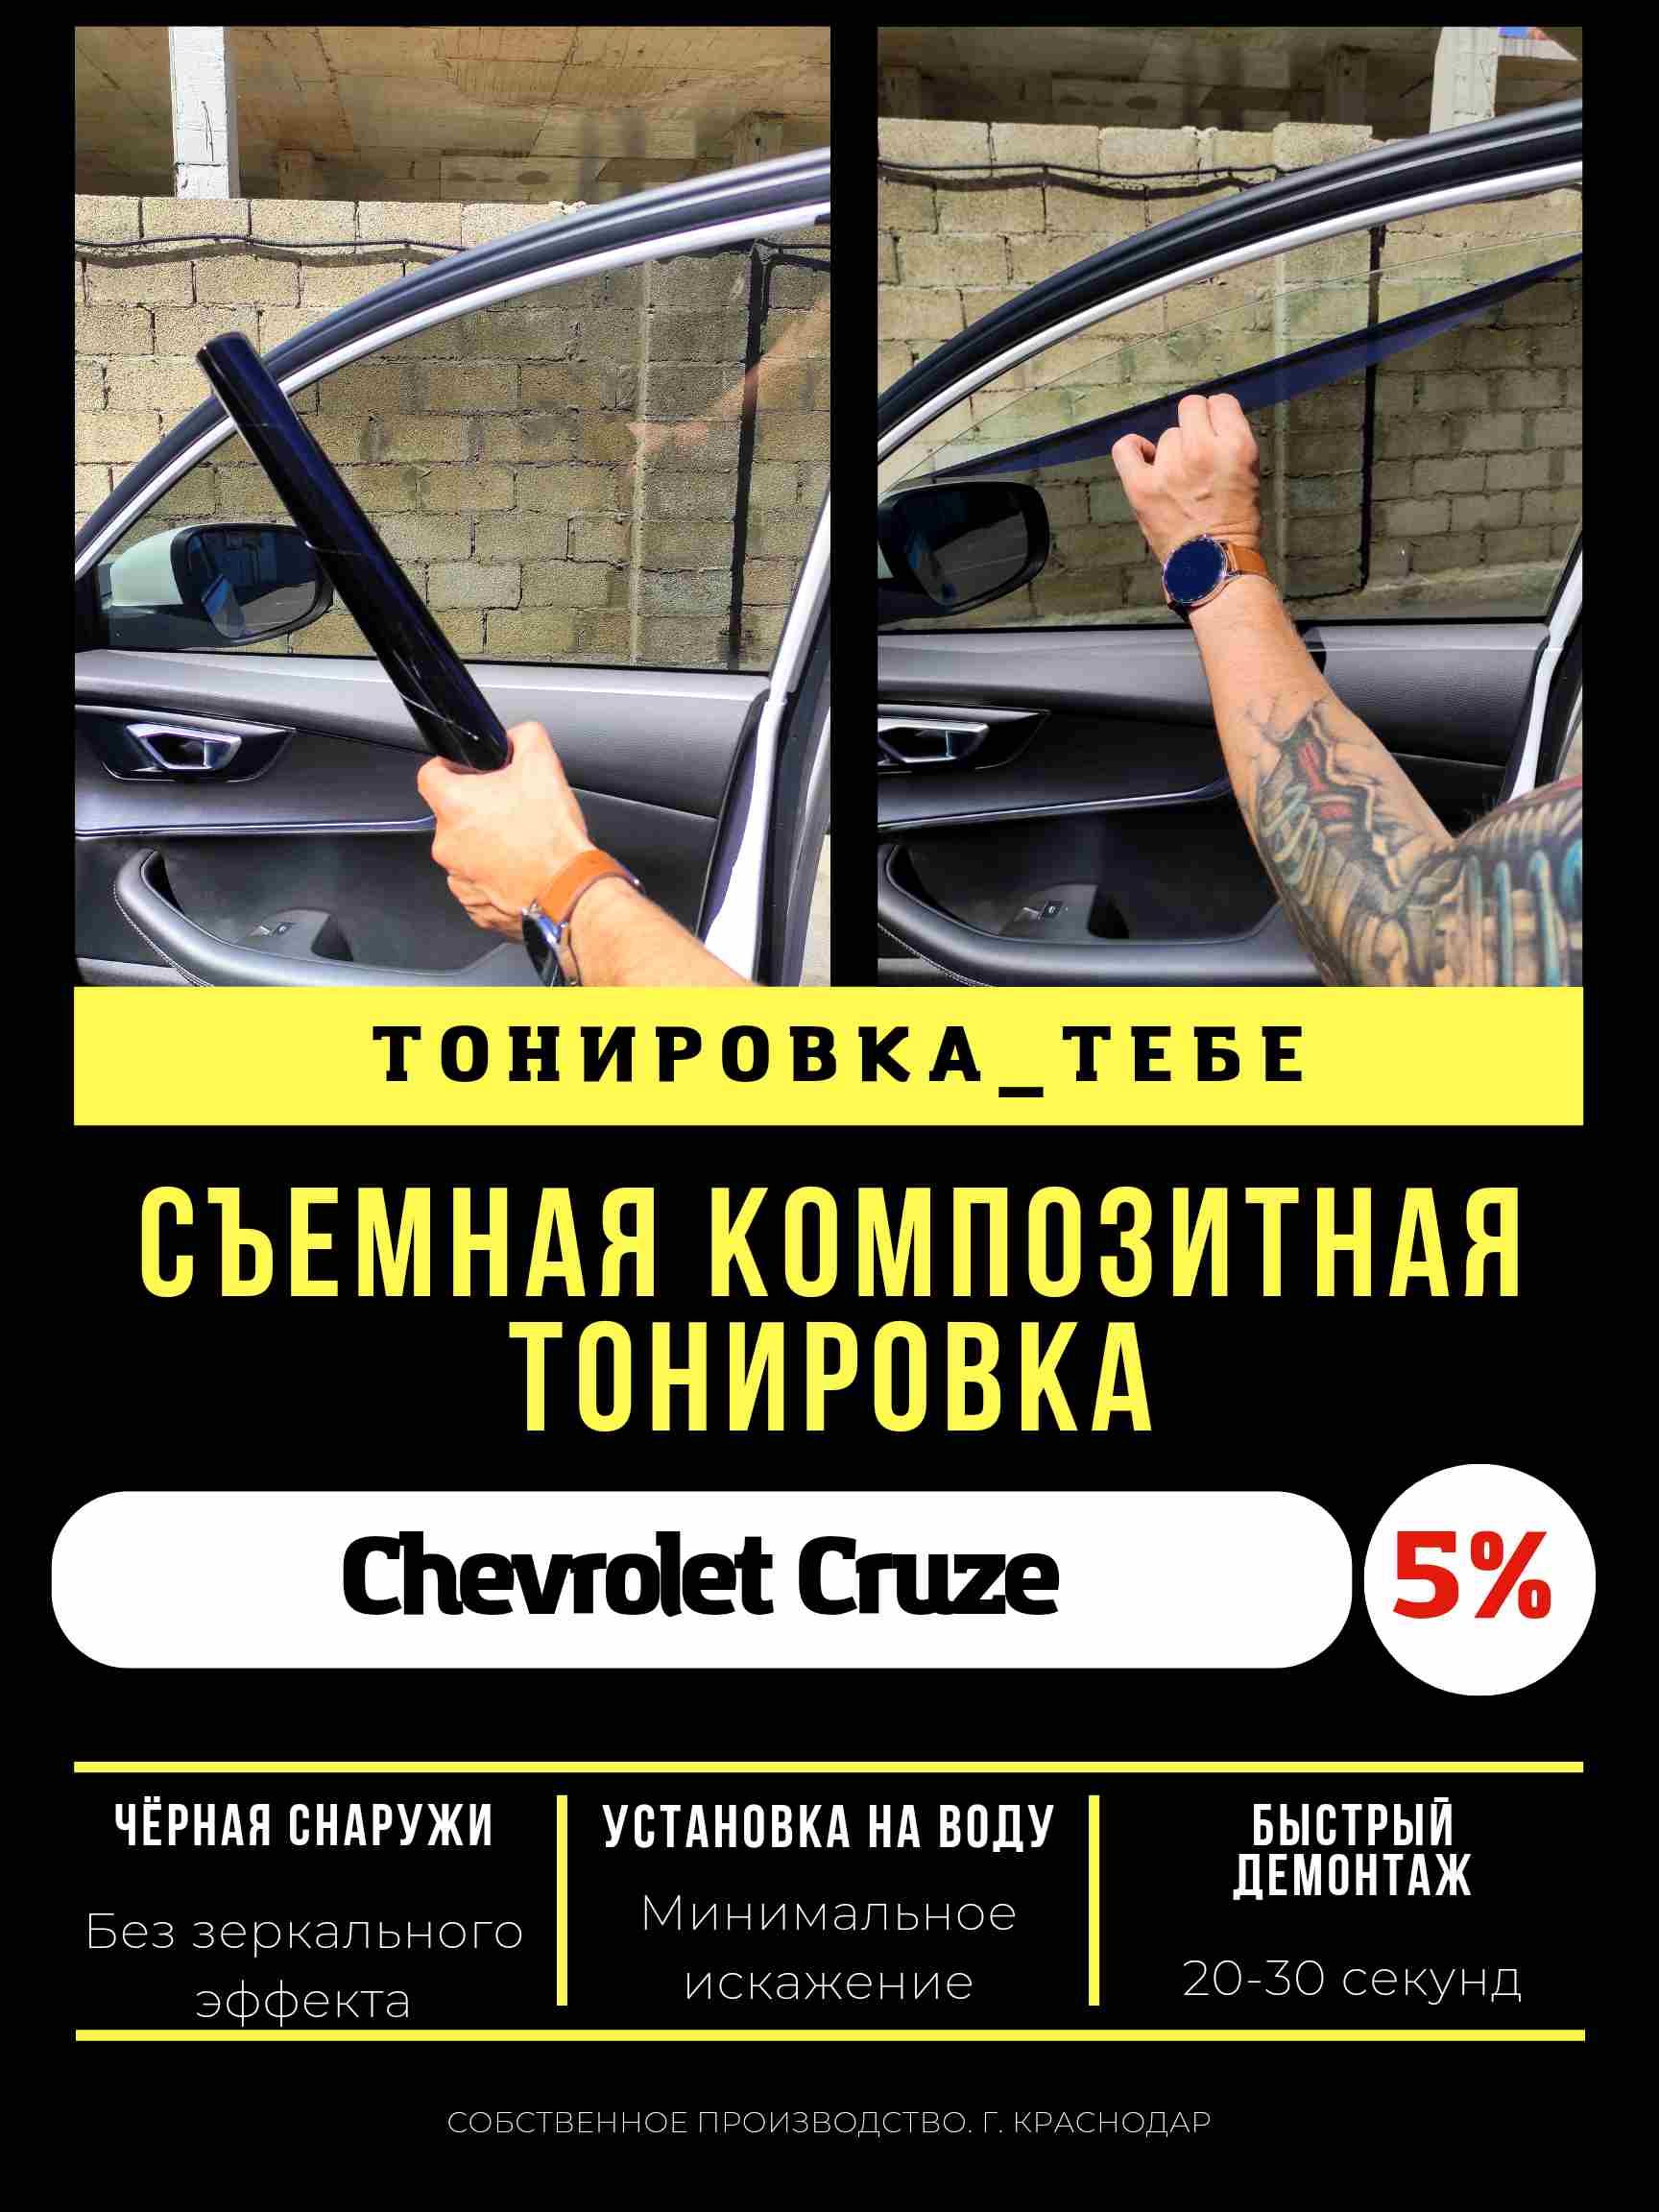 Съемная тонировка Chevrolet Cruze 5%